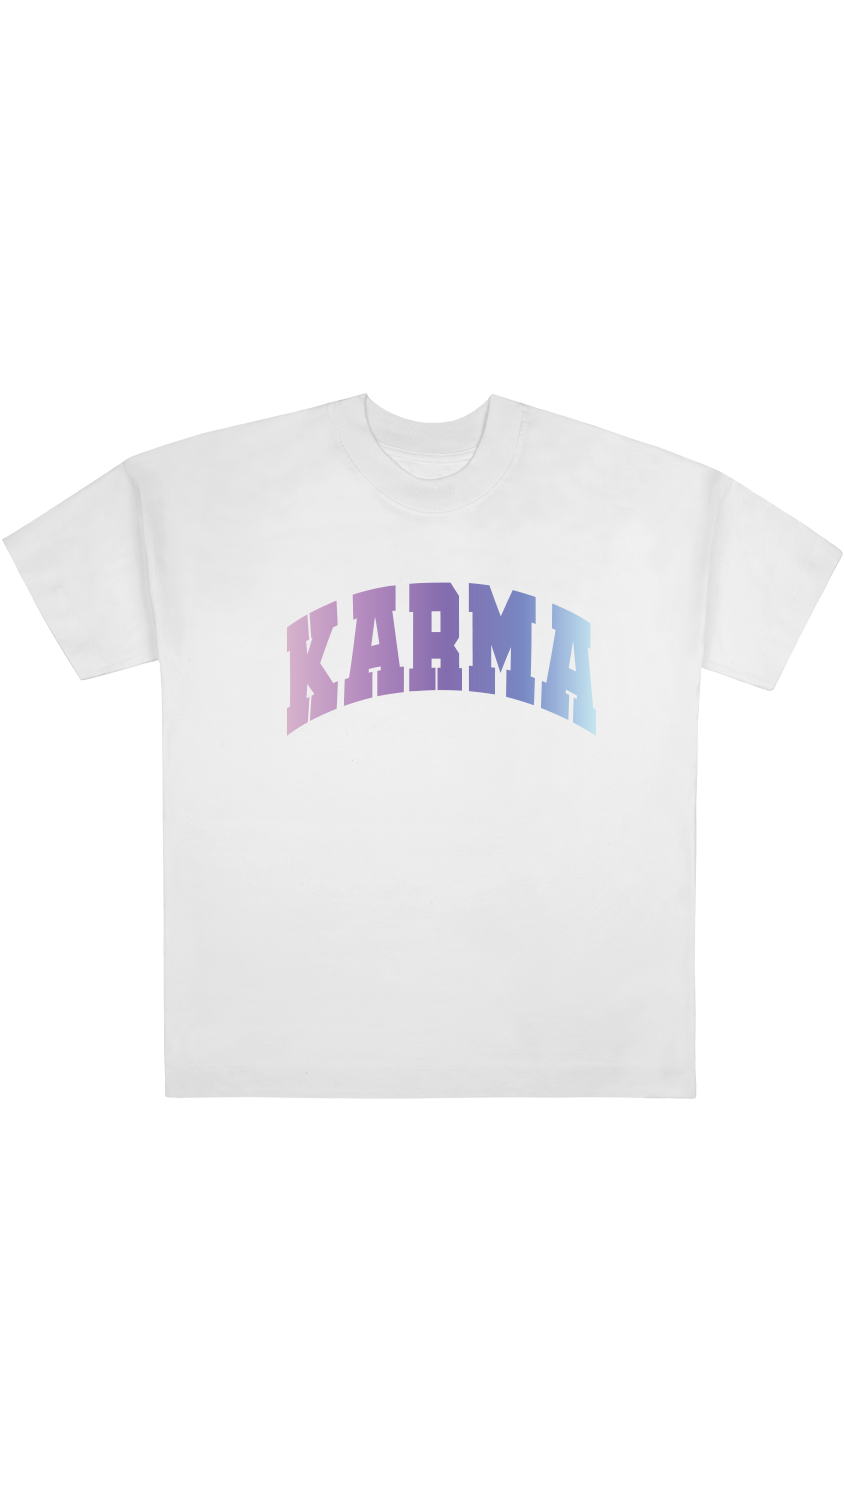 Karma Shirt weiß